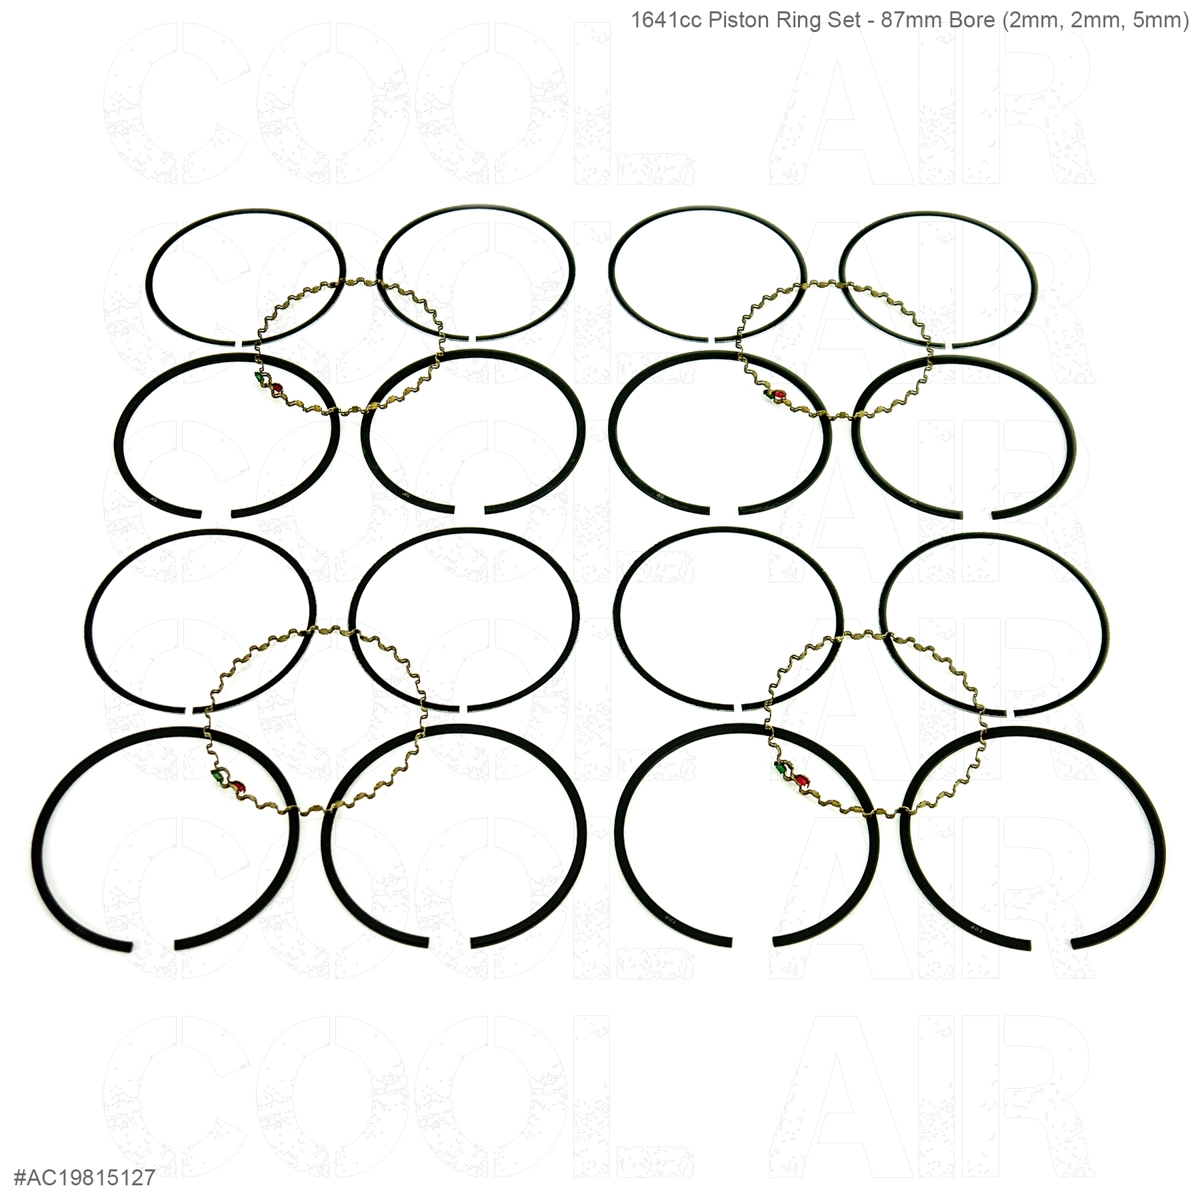 1641cc Piston Ring Set - 87mm Bore (2mm, 2mm, 5mm)